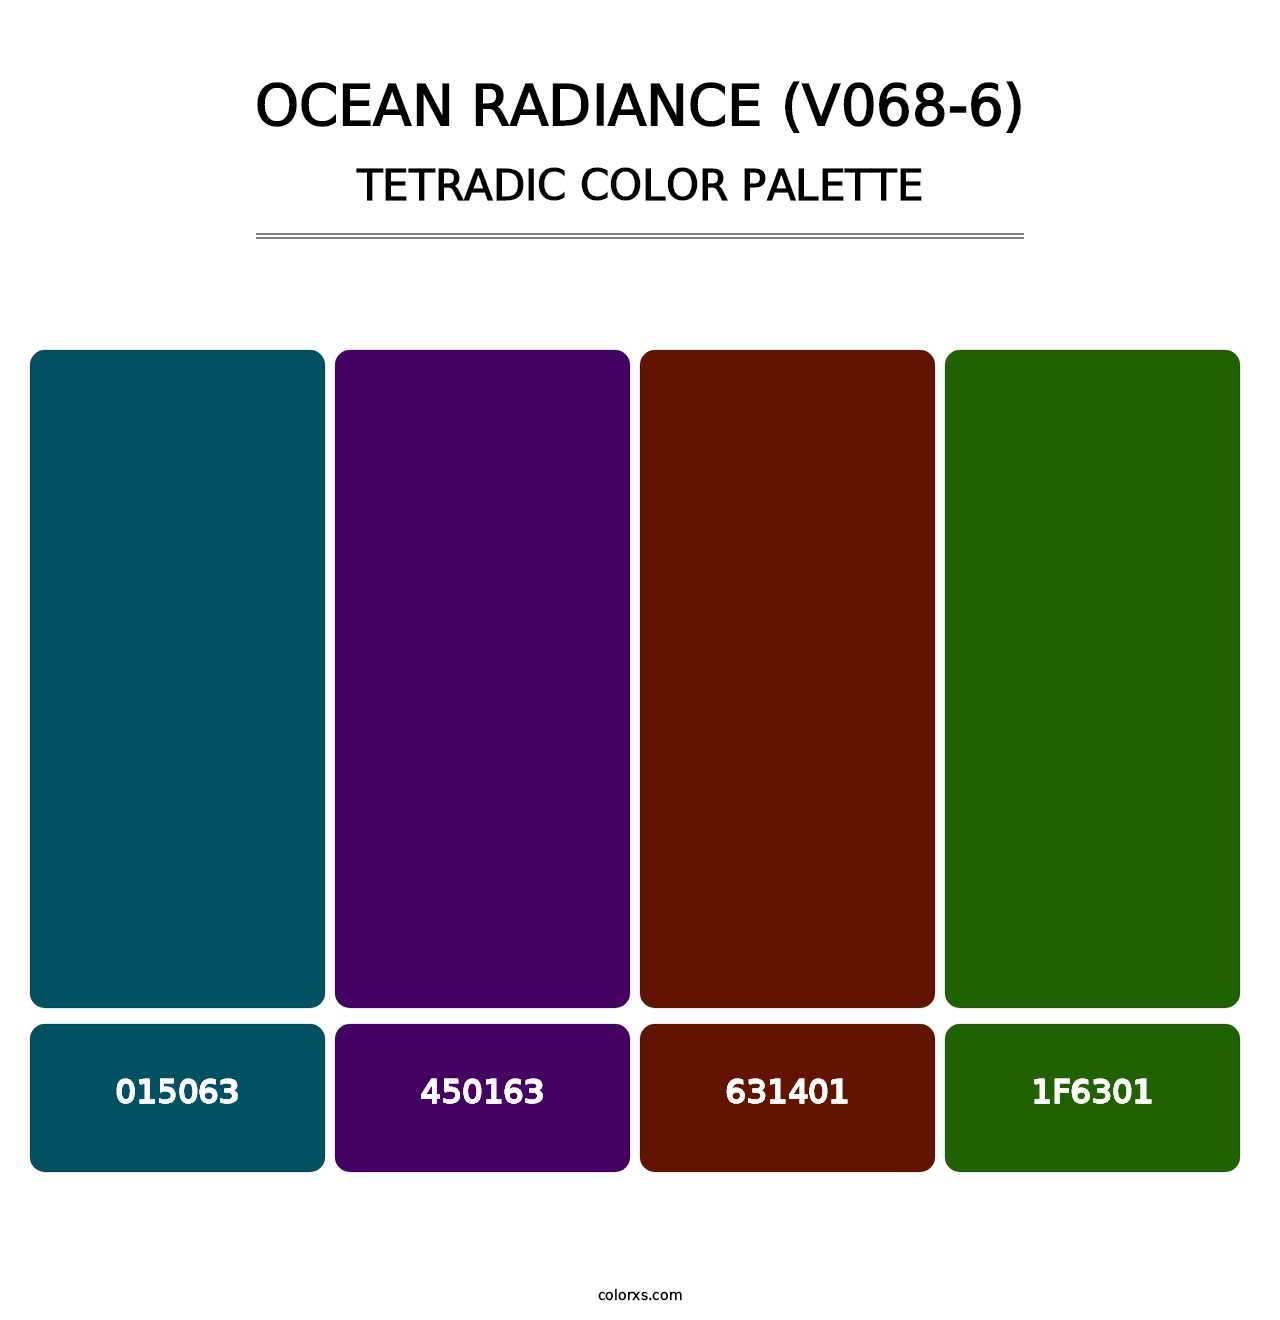 Ocean Radiance (V068-6) - Tetradic Color Palette